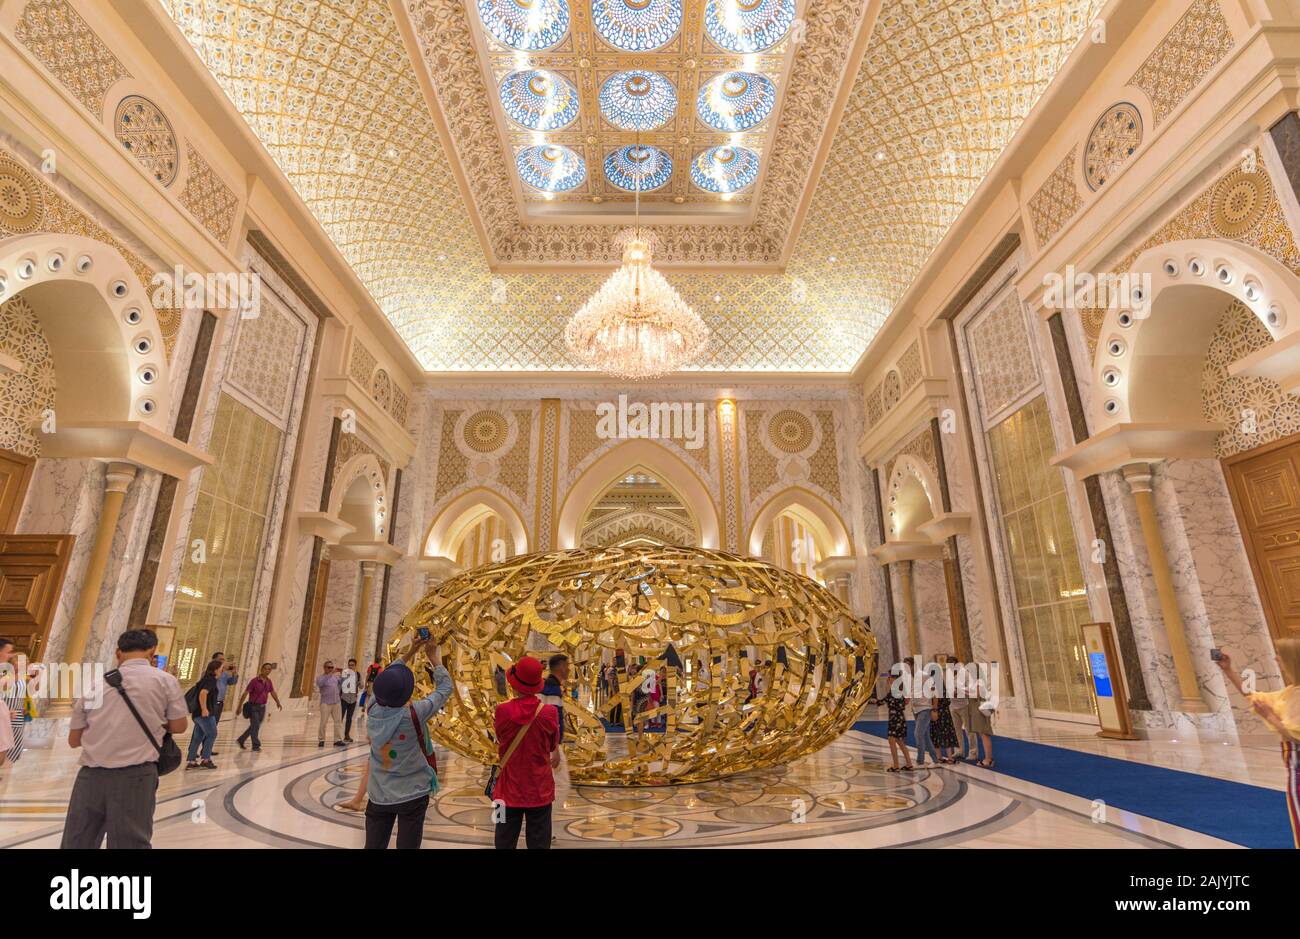 Abu Dhabi, United Arab Emirates: The sumptuous interiors of Presidential Palace (Qasr Al Watan), Palace of the Nation, Arabic golden art installation Stock Photo